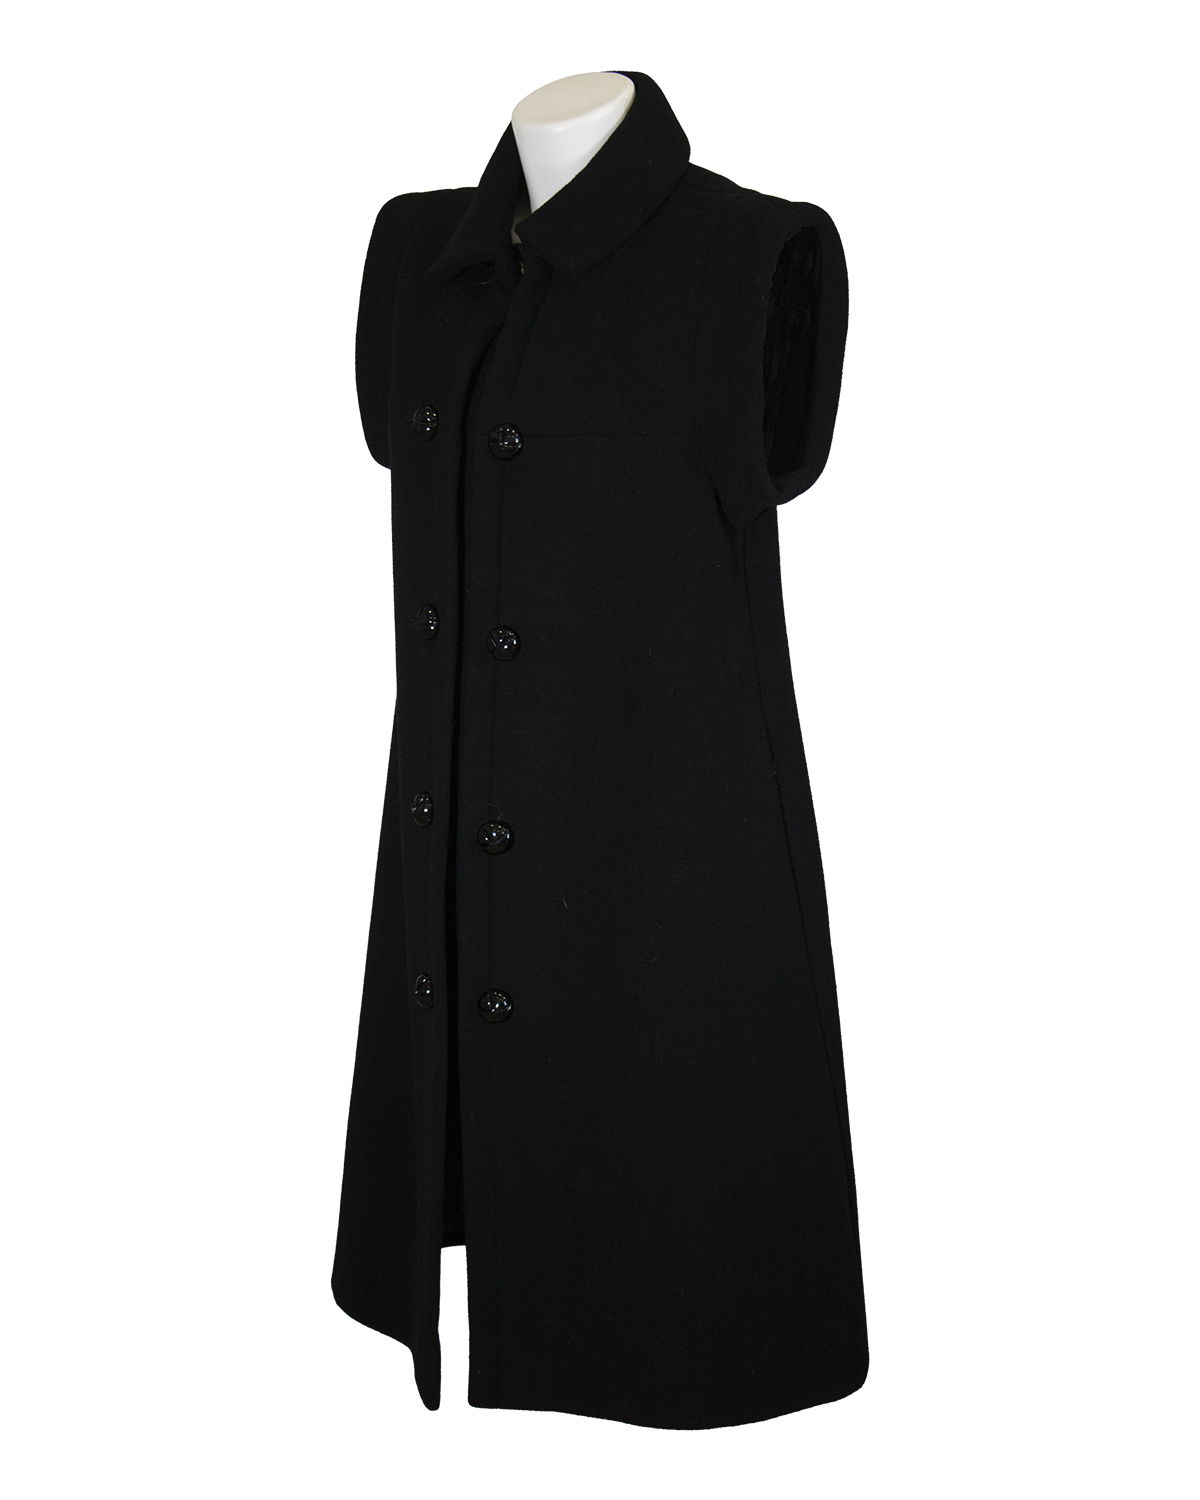 Pierre Cardin Sleeveless Black Dress from 1970s